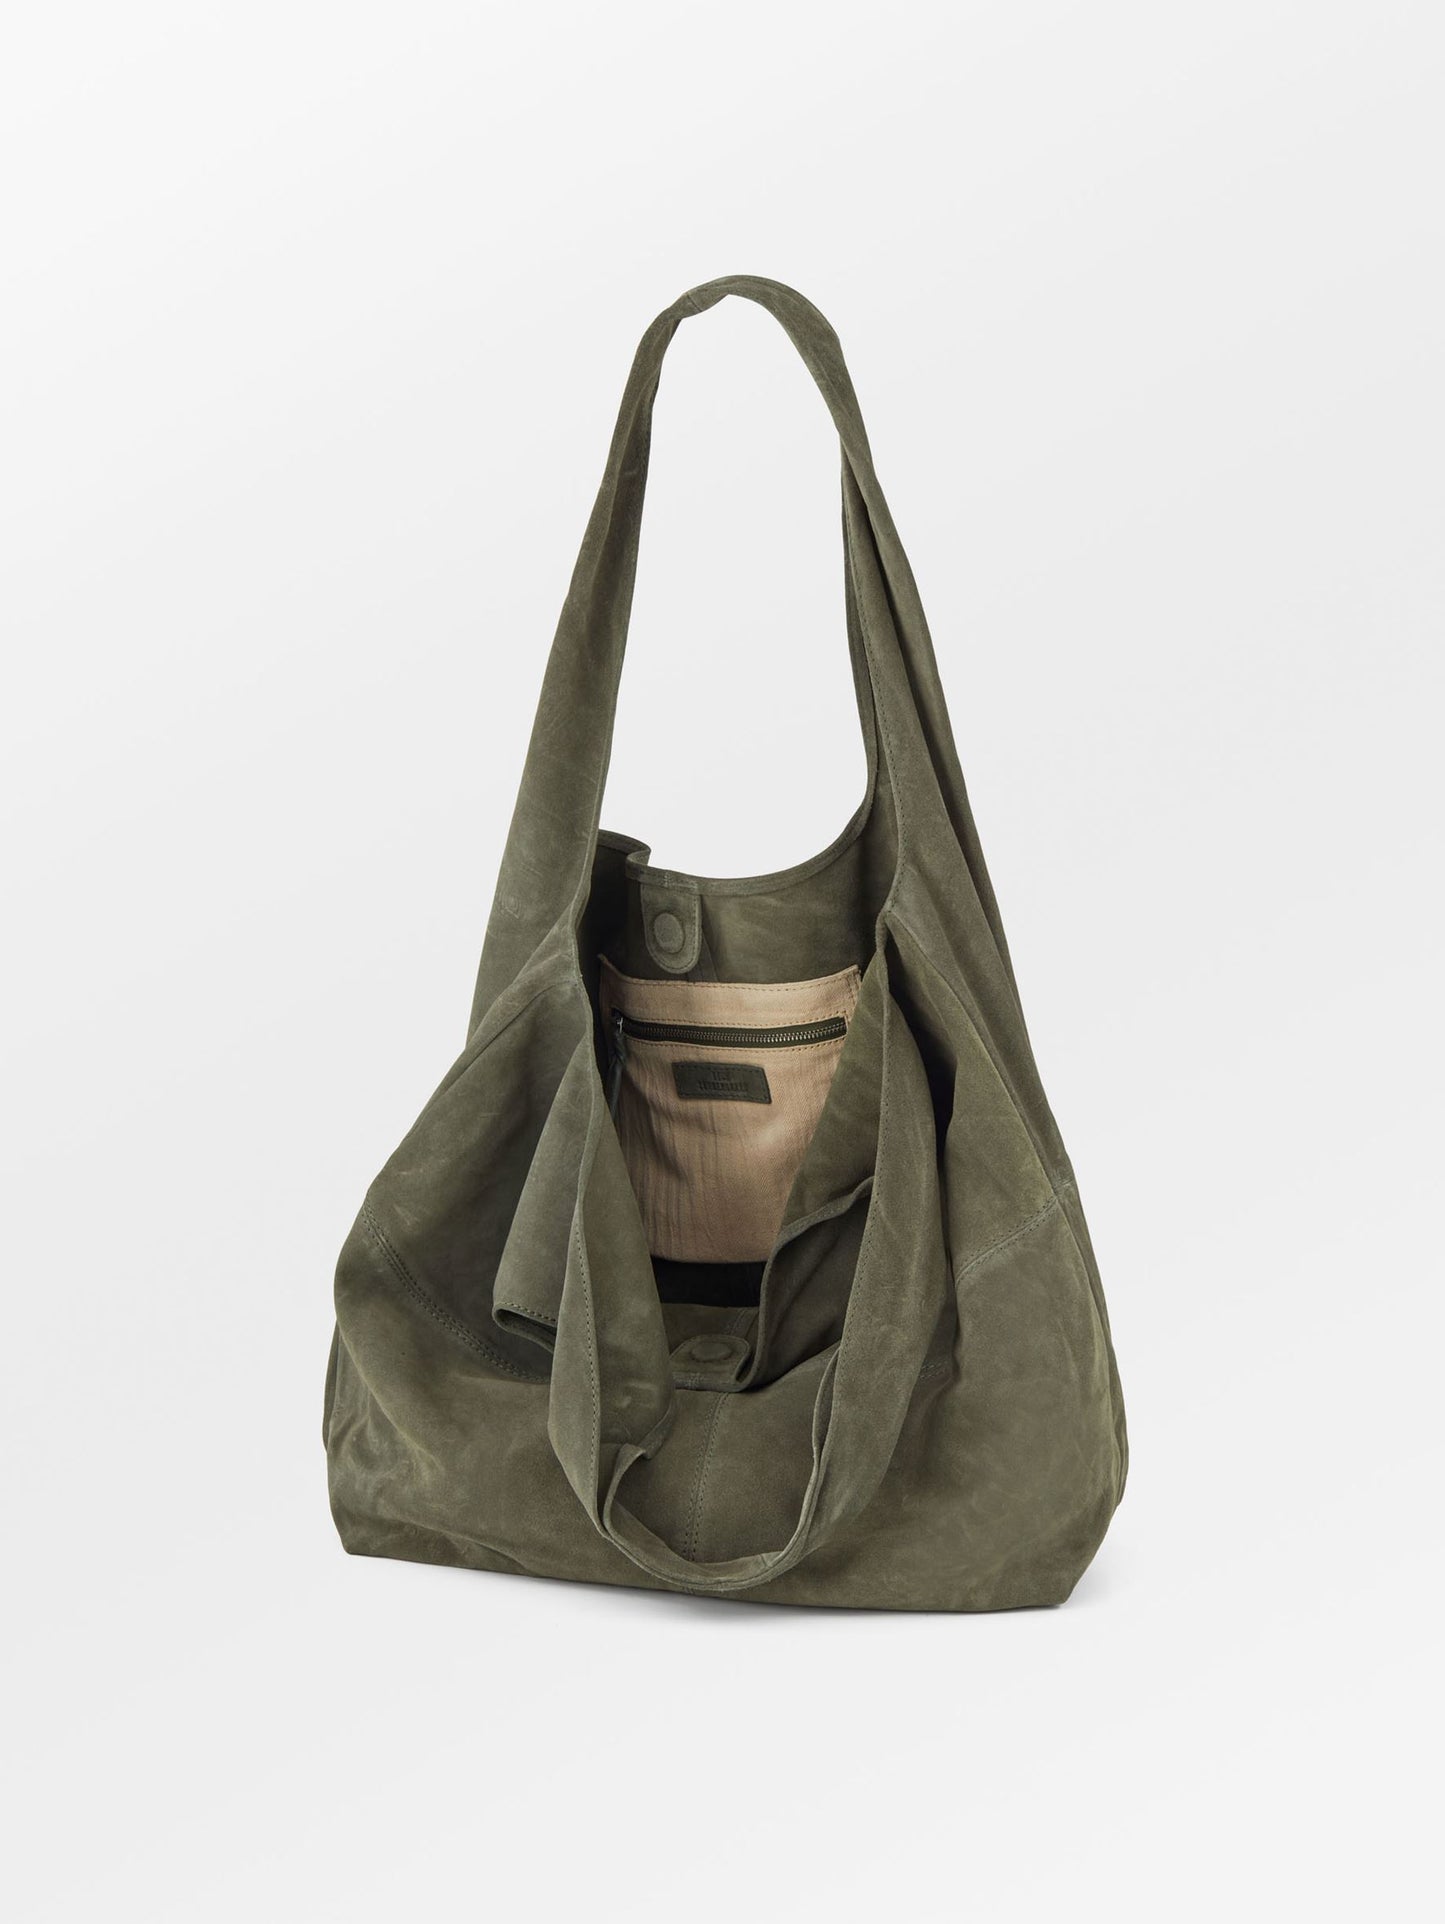 Becksöndergaard, Suede Dalliea Bag - Army, bags, bags, gifts, bags